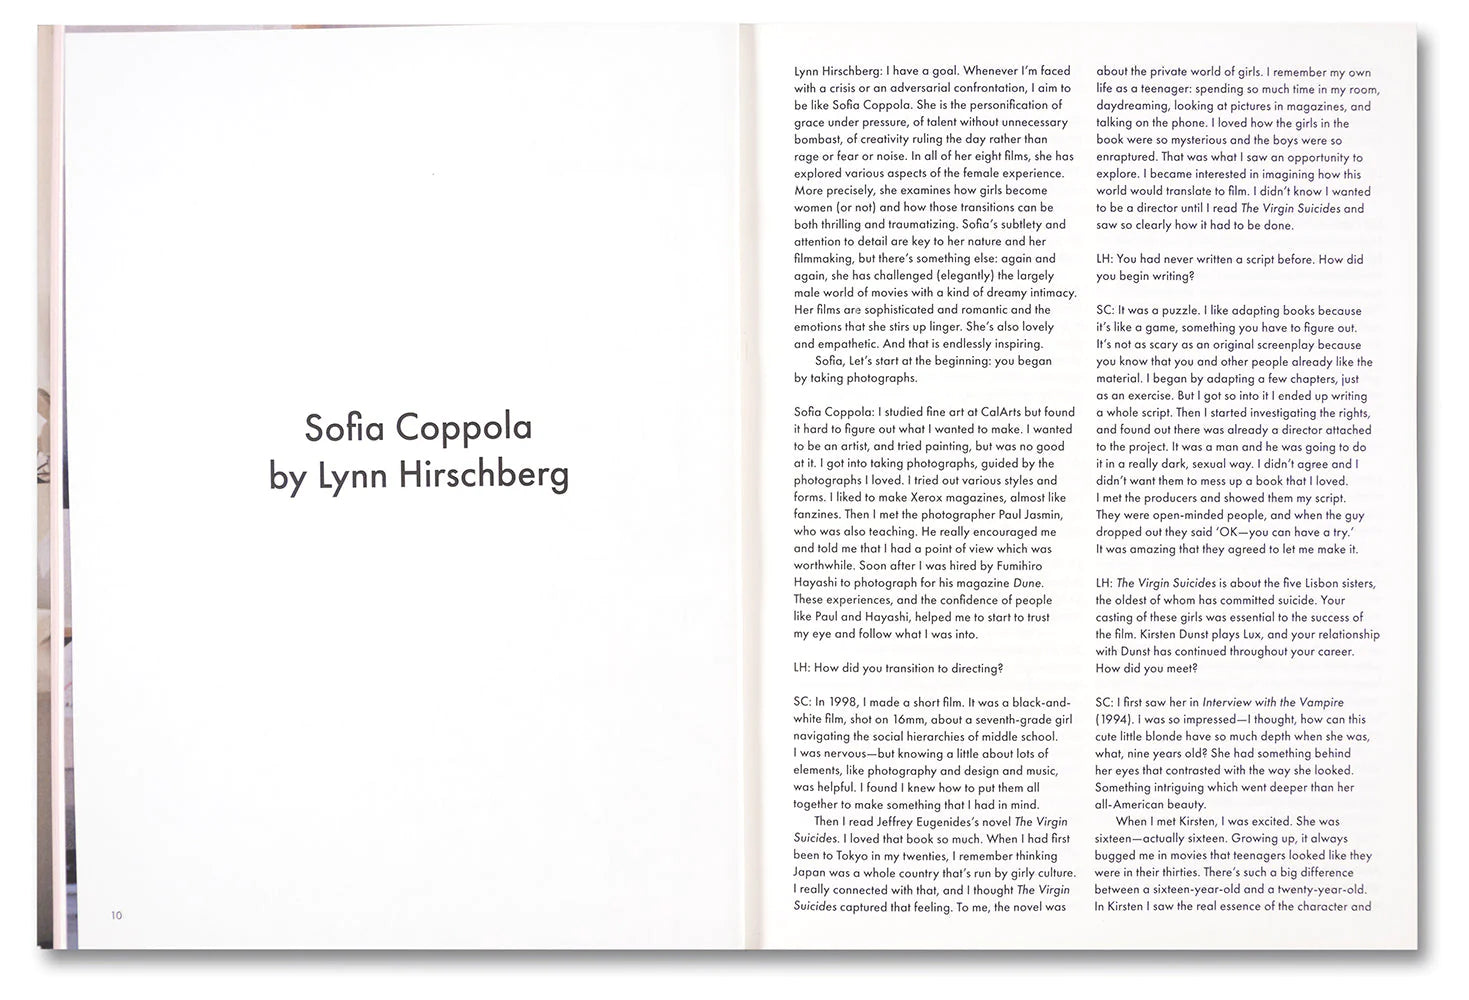 Sofia Coppola - Archive – Parallel Editions